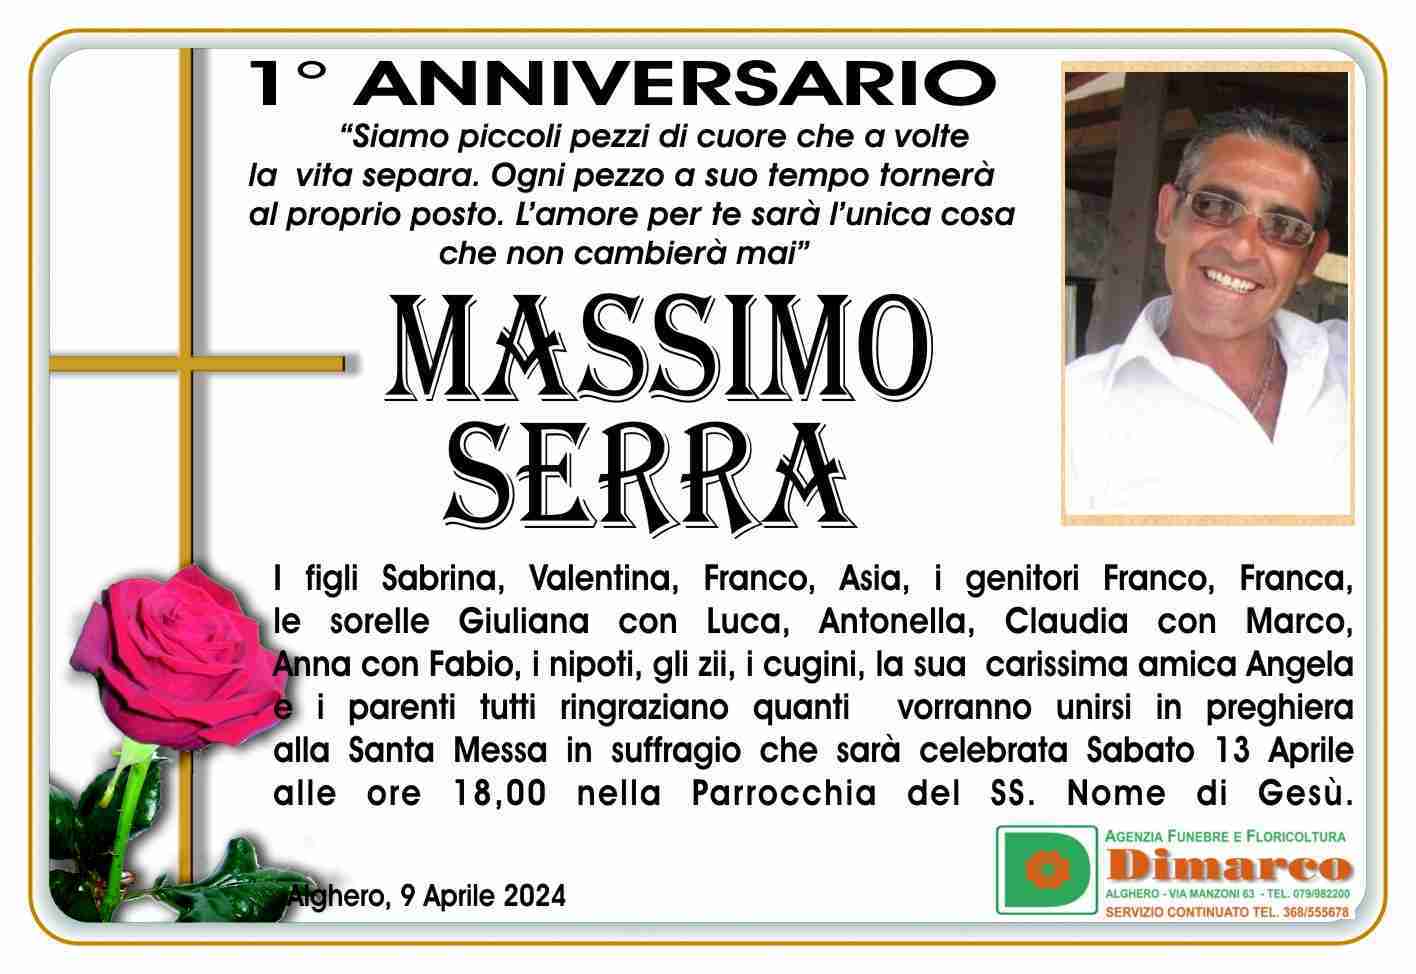 Massimo Serra